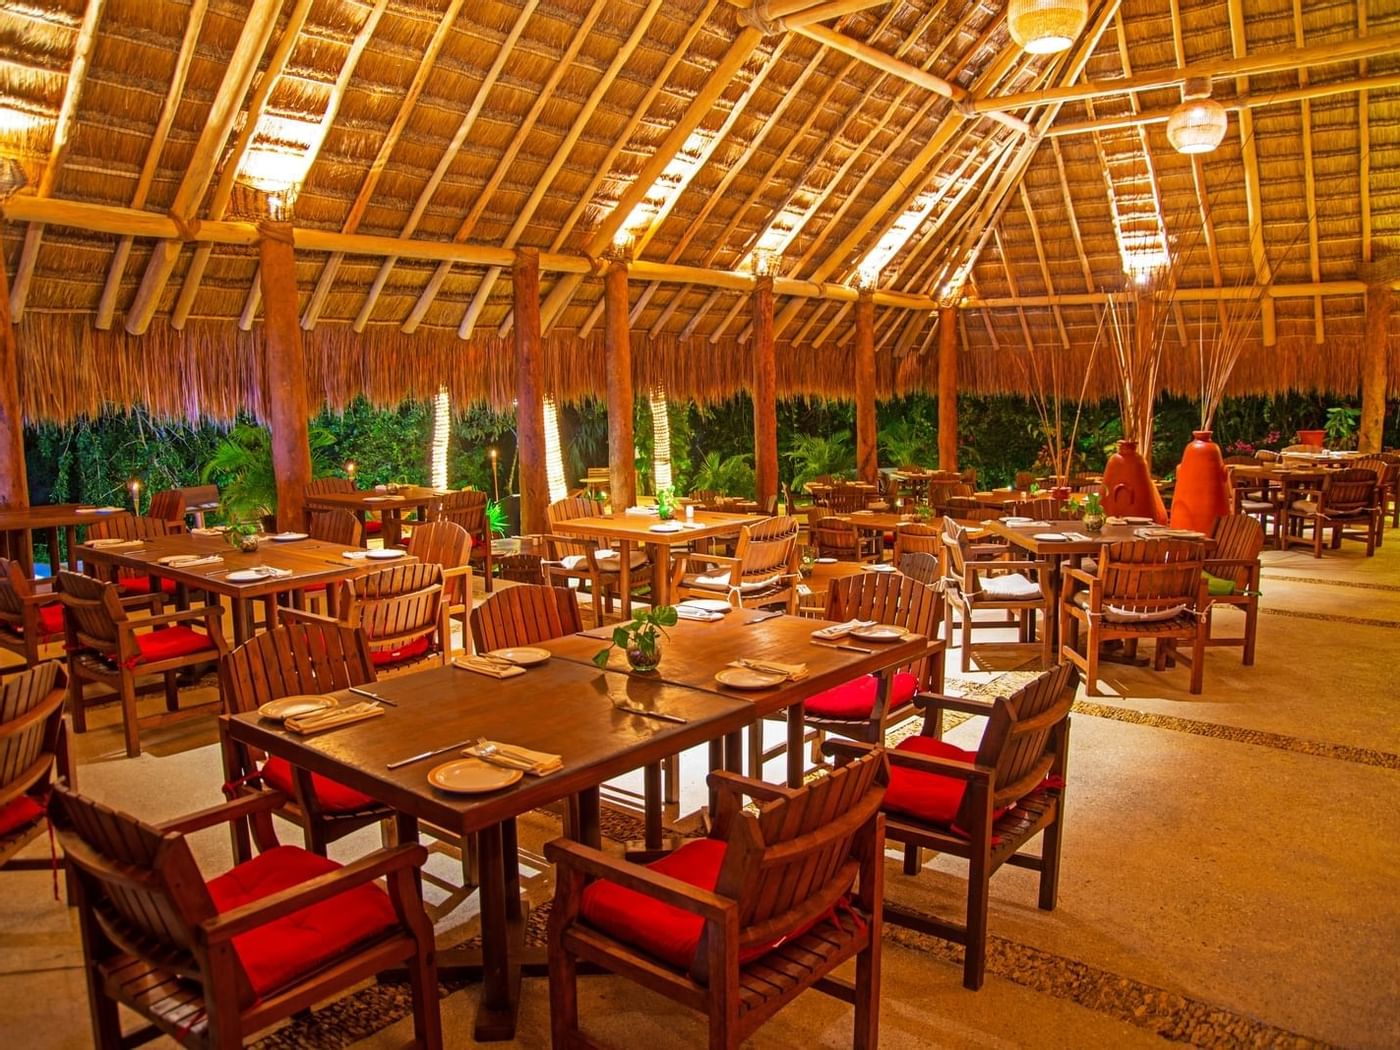 Dining area at La palapa restaurant in The Explorean Kohunlich